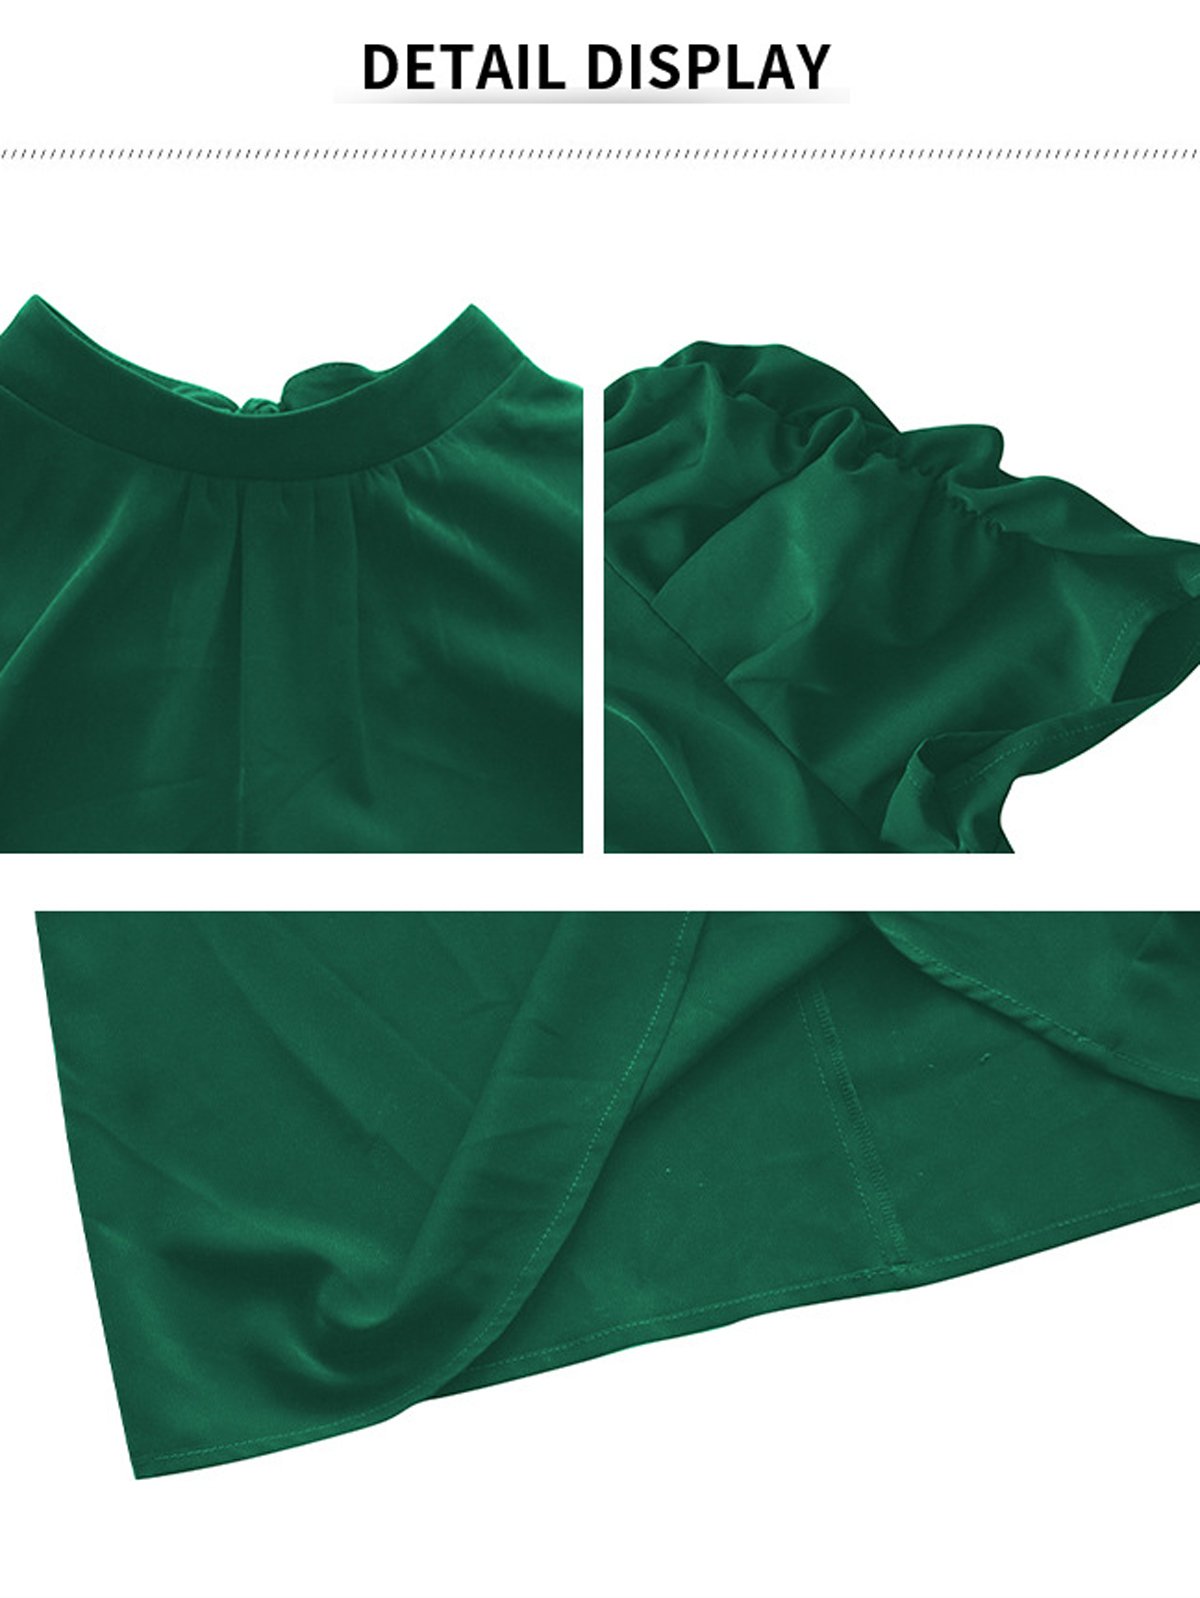 Half Turtleneck Short Sleeve Plain Regular Loose Shirt For Women